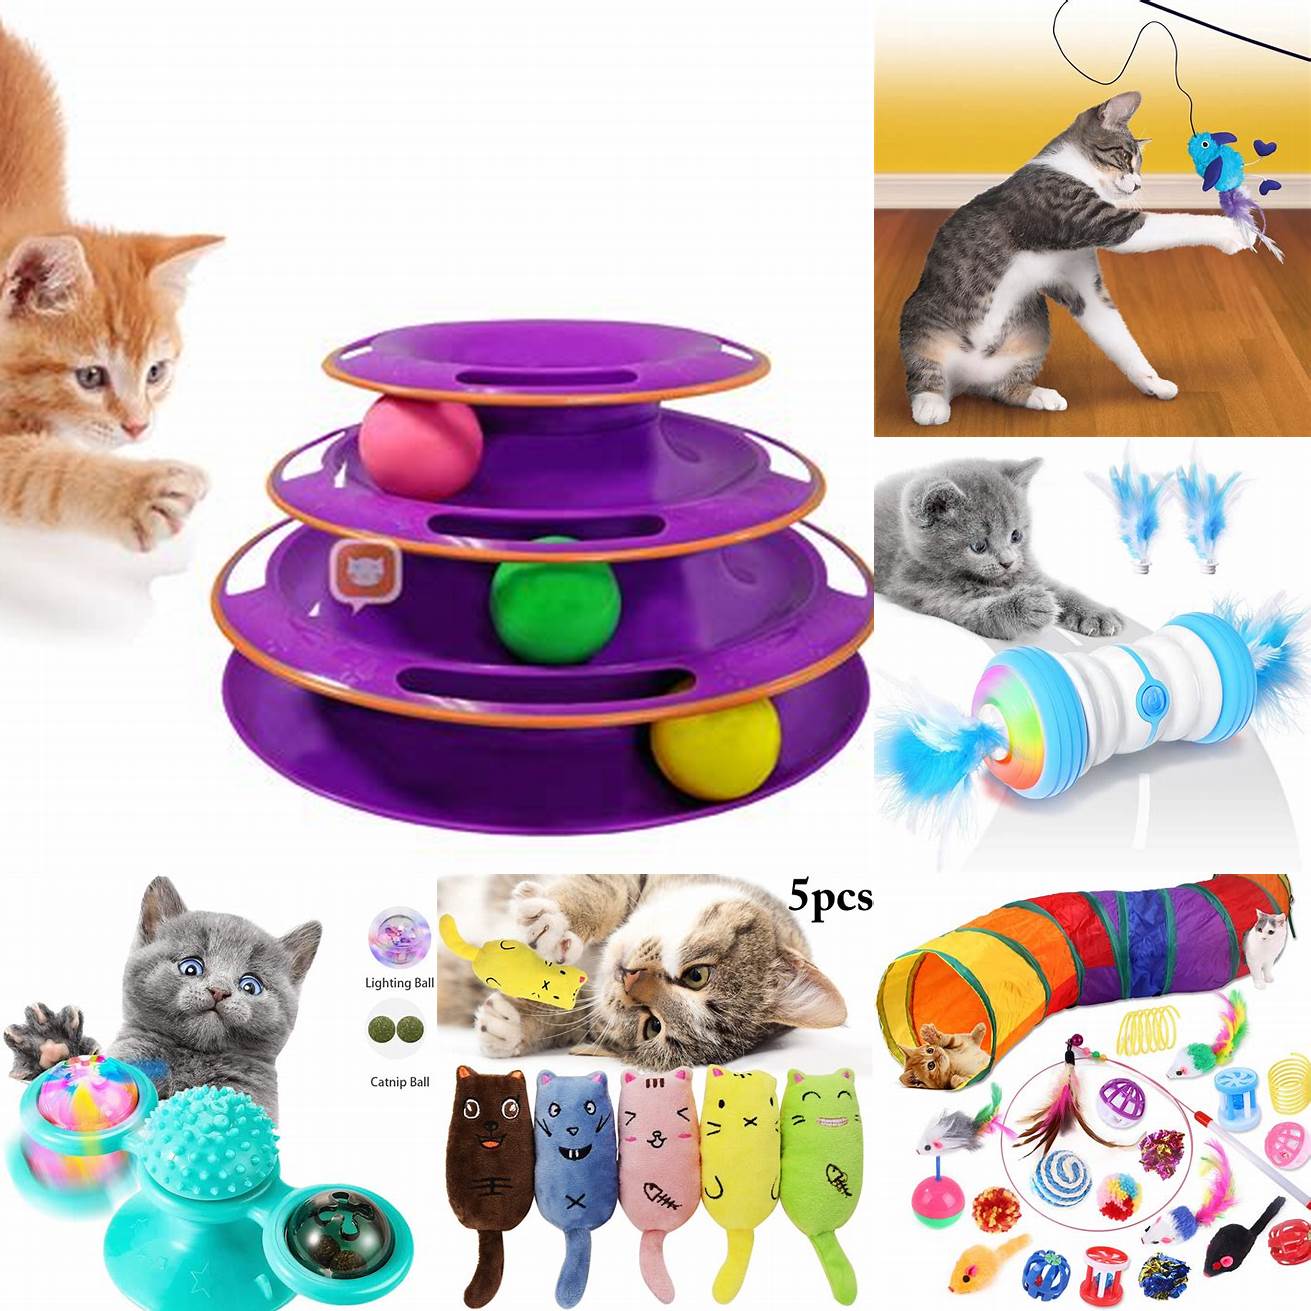 Cat toy images